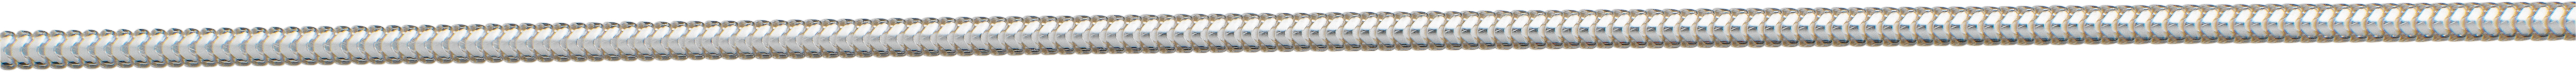 Snake chain silver 925/- Ø 1,30mm